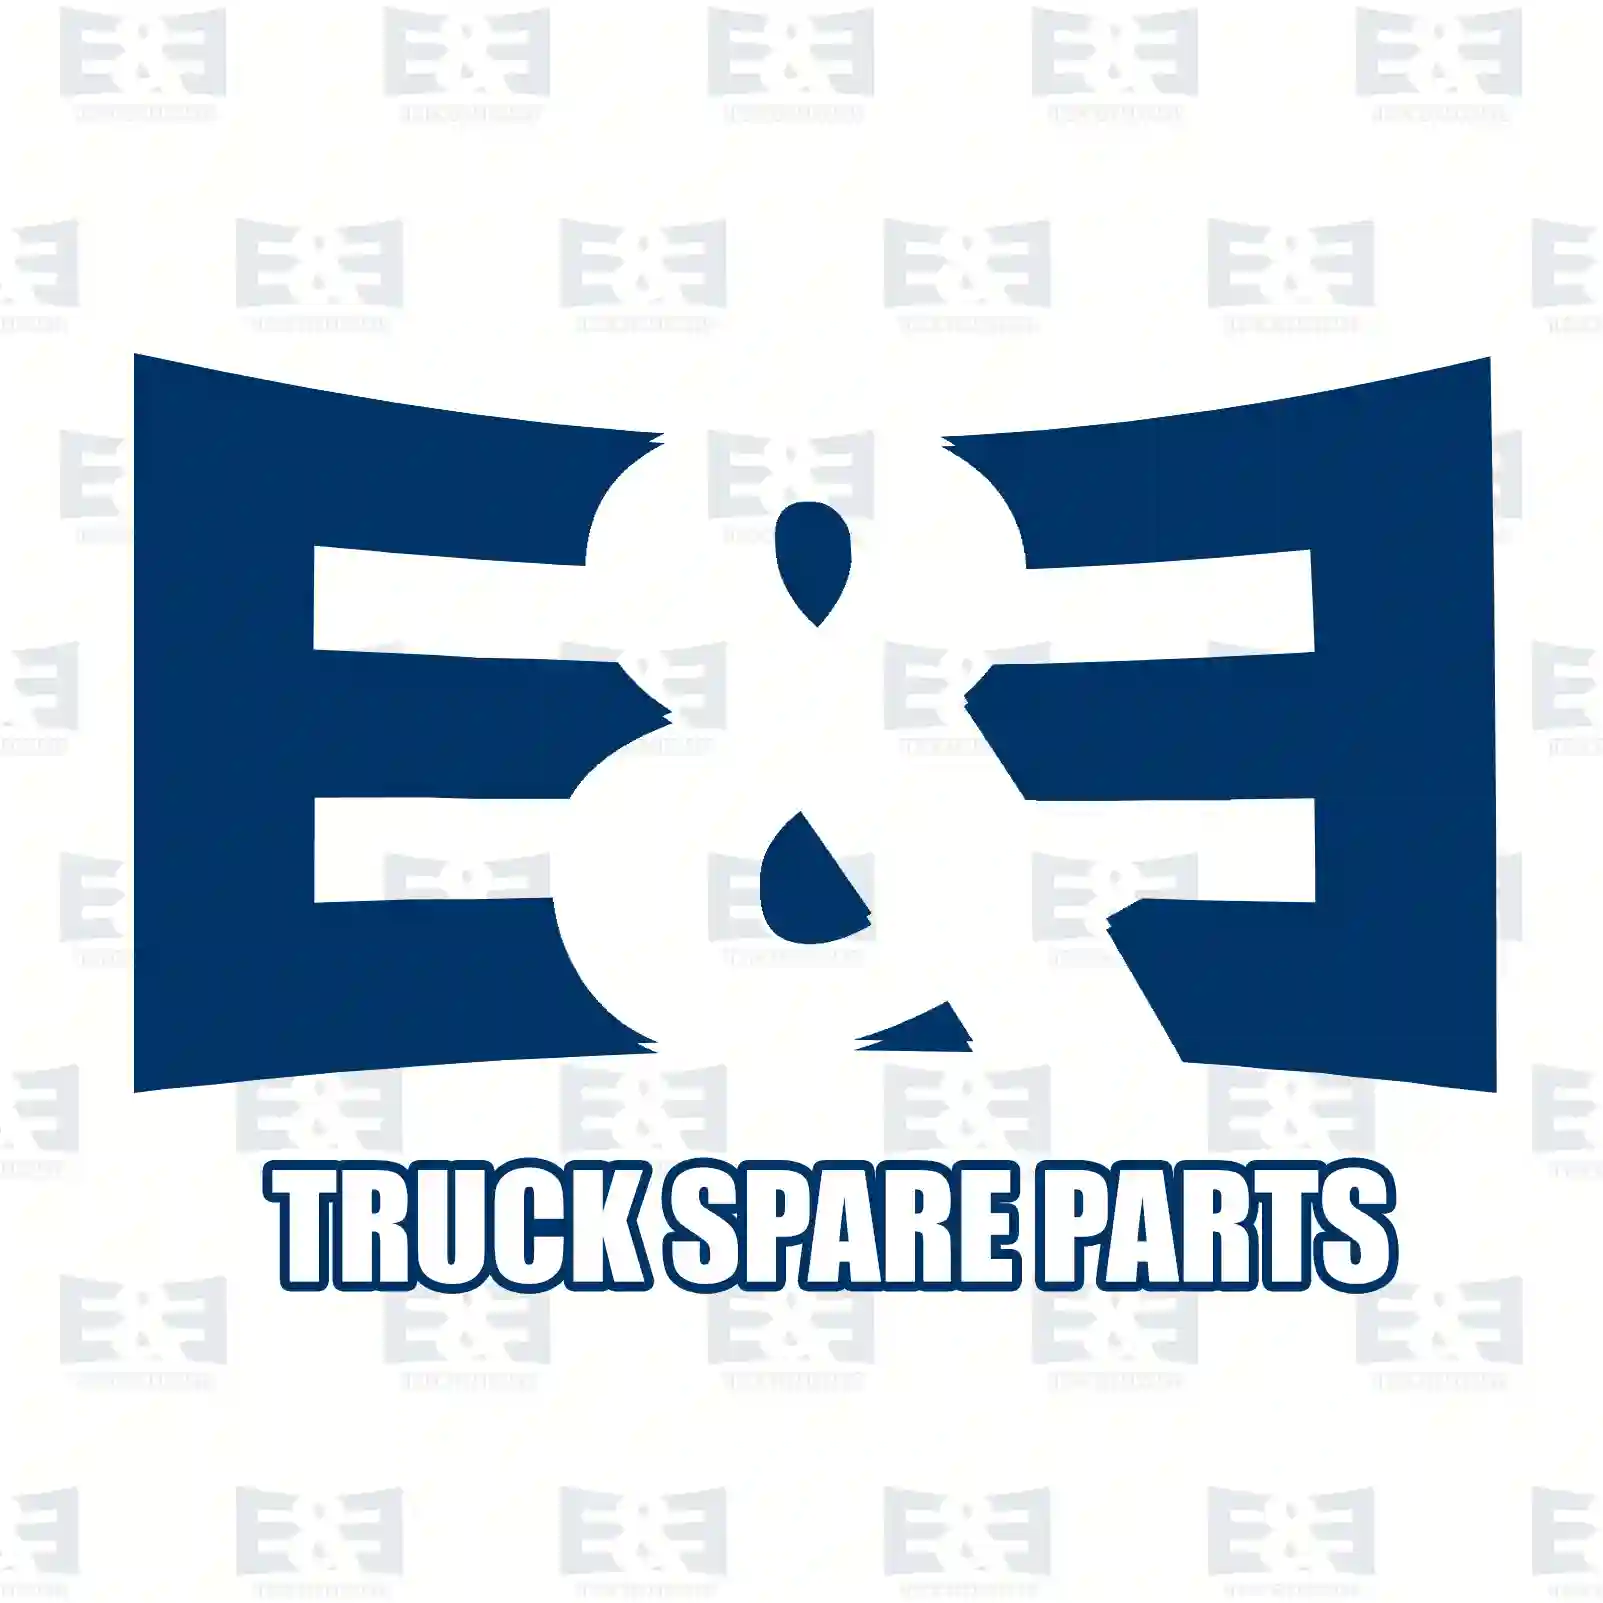 Bulb Bulb, EE No 2E2290610 ,  oem no:1354876, 01121371, 607020008, 6200013, 620013, 6200696, 81259017069, 072601024100, 5003097003, 150109, 061375, 3600136107, 5350642313, 273584, 277830, 281830, 942086 E&E Truck Spare Parts | Truck Spare Parts, Auotomotive Spare Parts